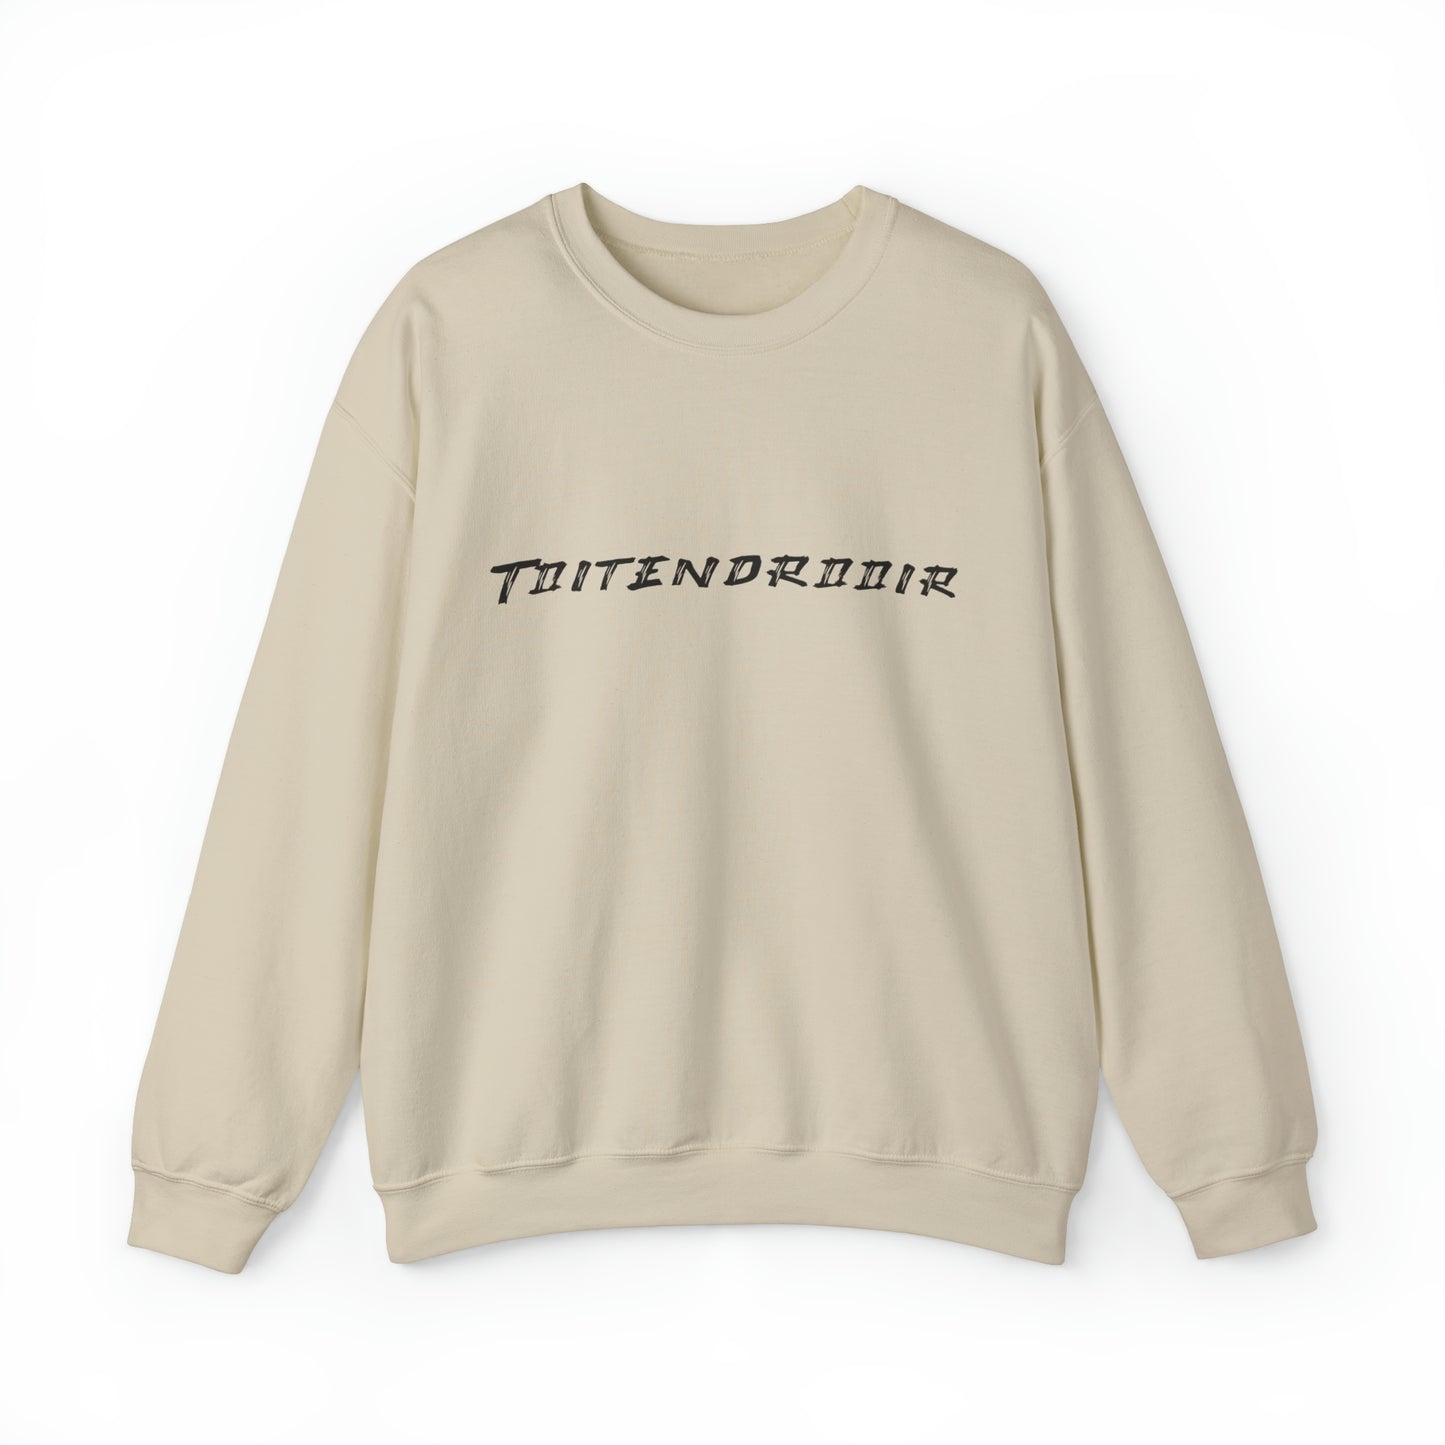 Int Oilsjters - Sweater - Tootendrooir